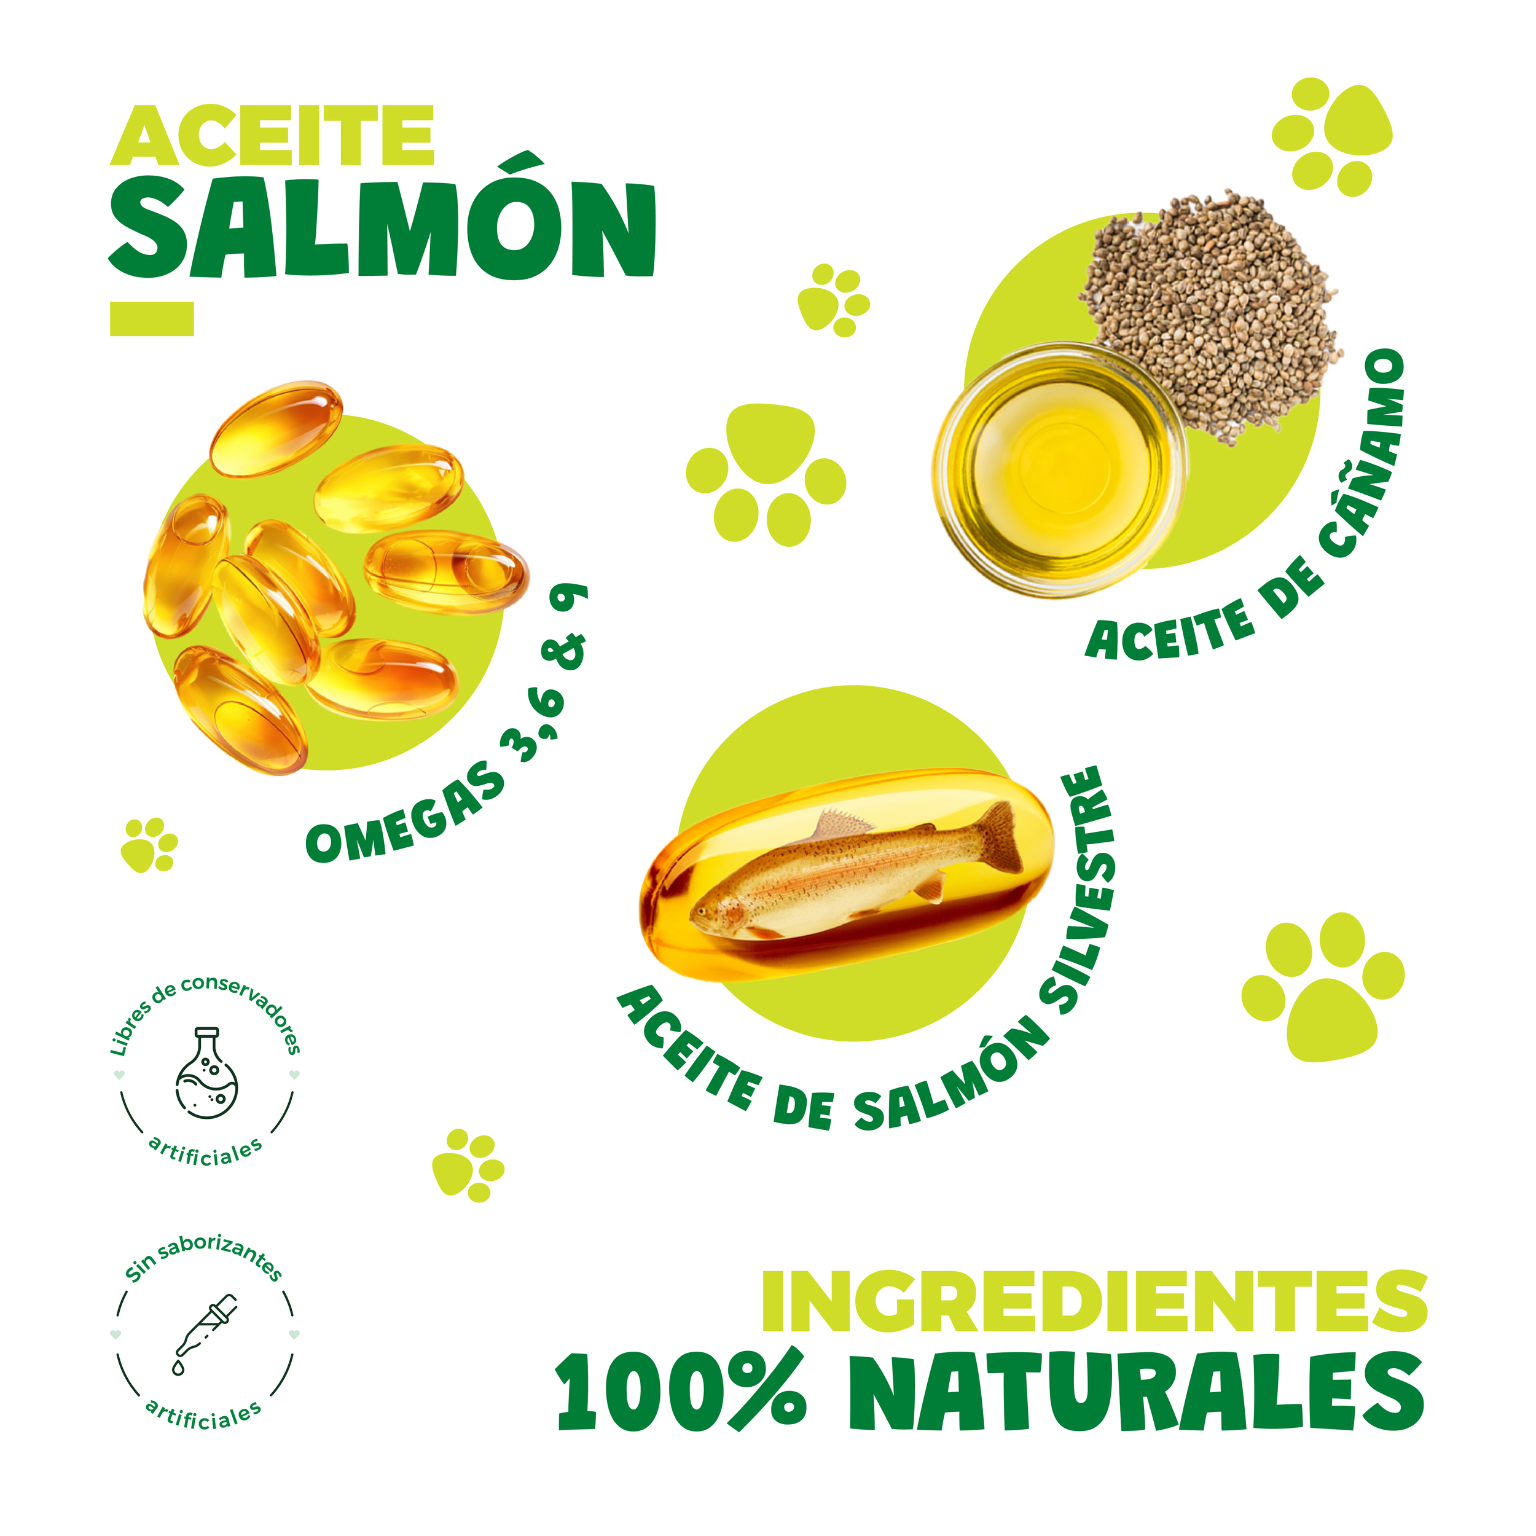 Aceite CBD perros salmon 6% - Gorilla Grillz